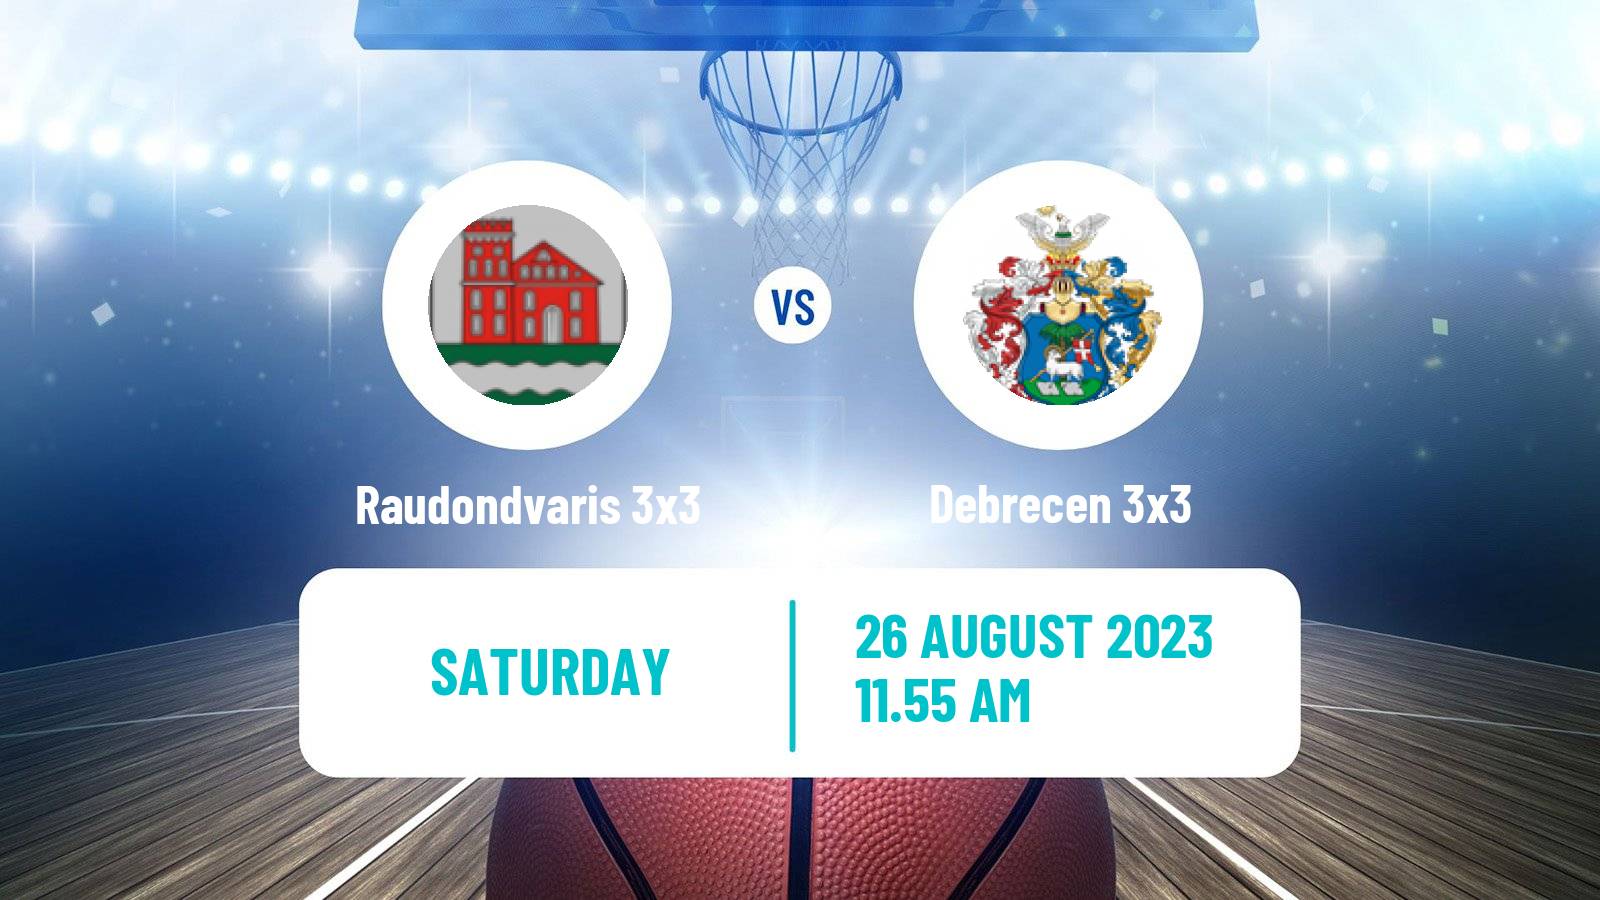 Basketball World Tour Debrecen 3x3 Raudondvaris 3x3 - Debrecen 3x3